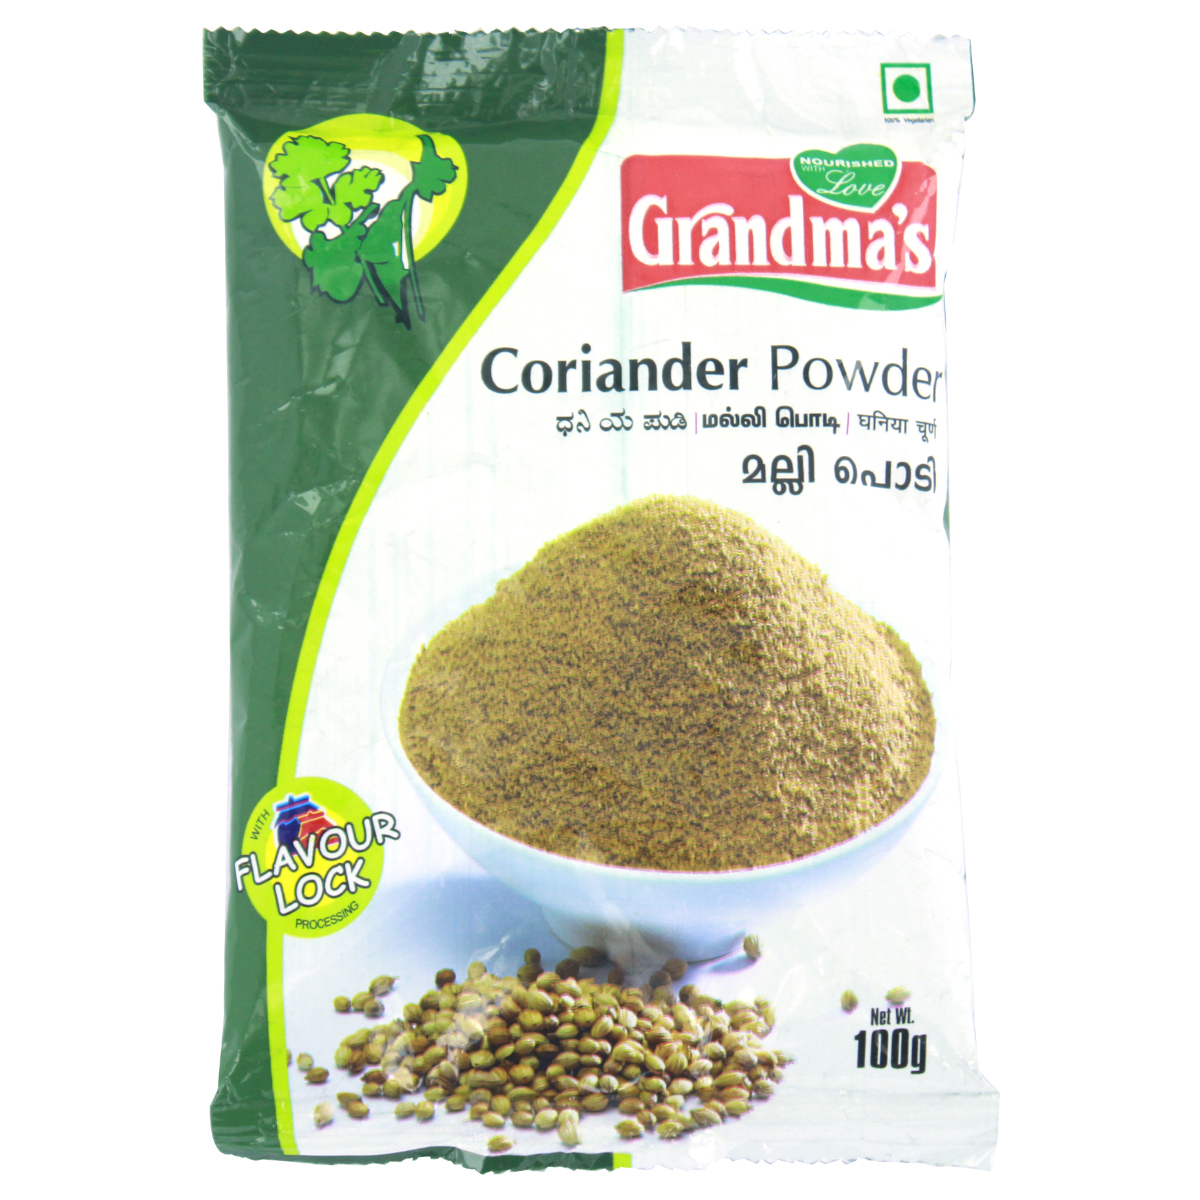 Grandmas Coriander Powder 100g